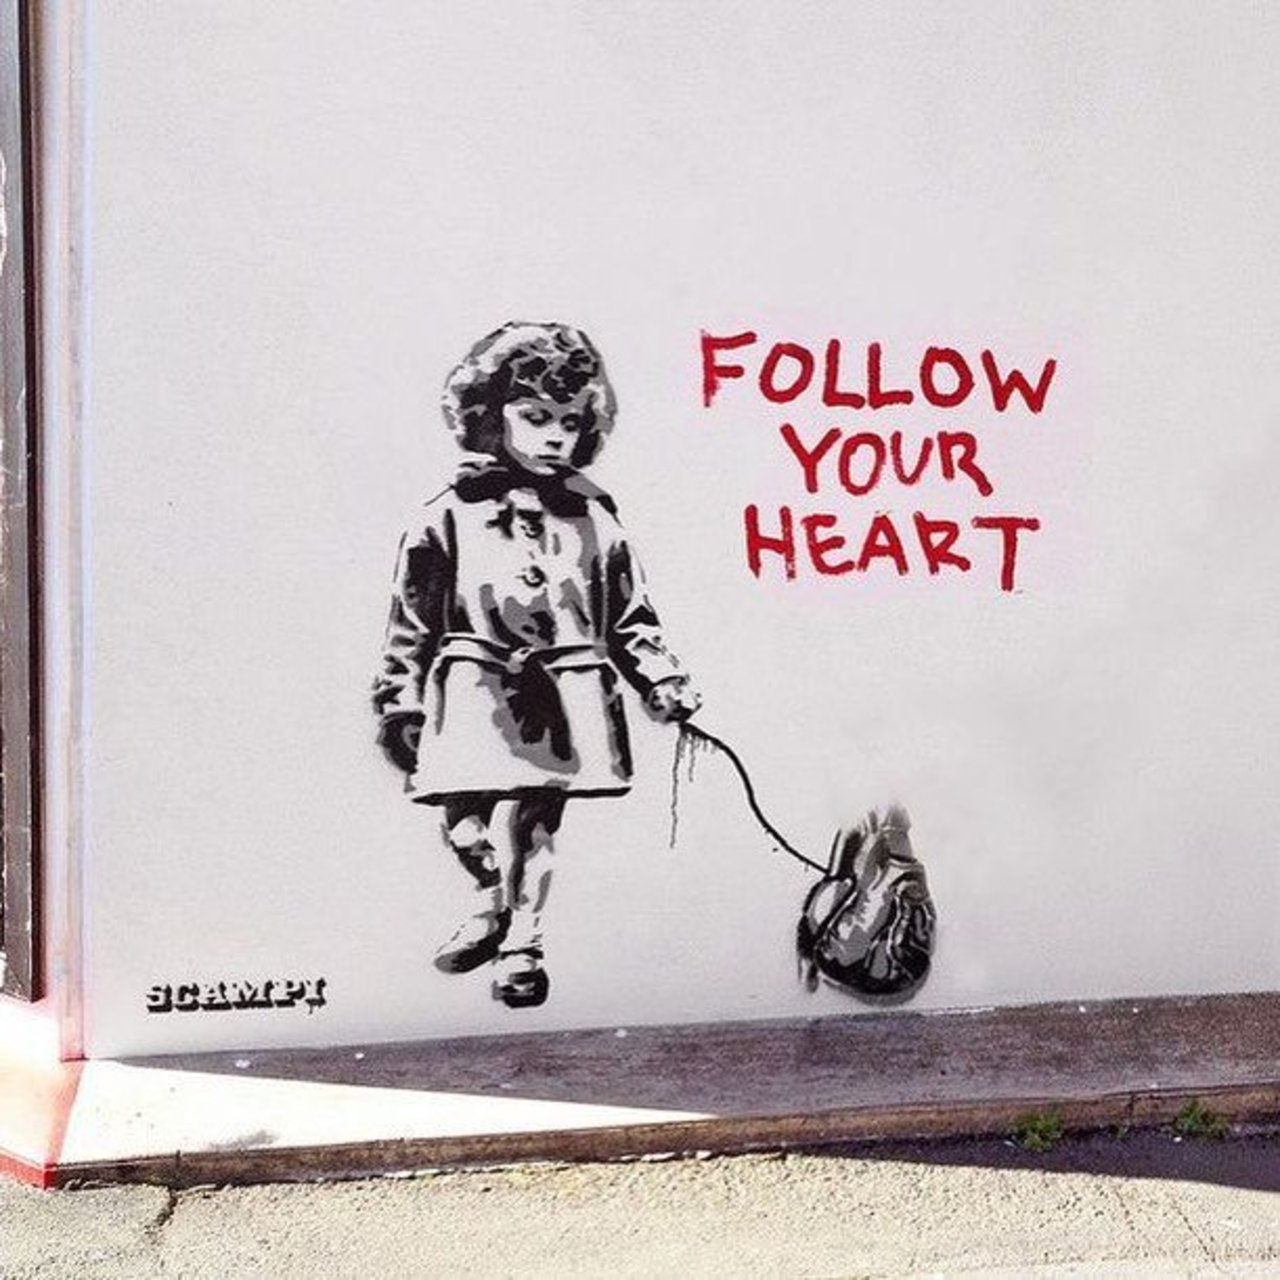 Mon cœur #kid #street #streetart #streetartparis #graff #graffiti #wallart #sprayart #urban #urbain #urbanart #urba… https://t.co/FStlTB94KL